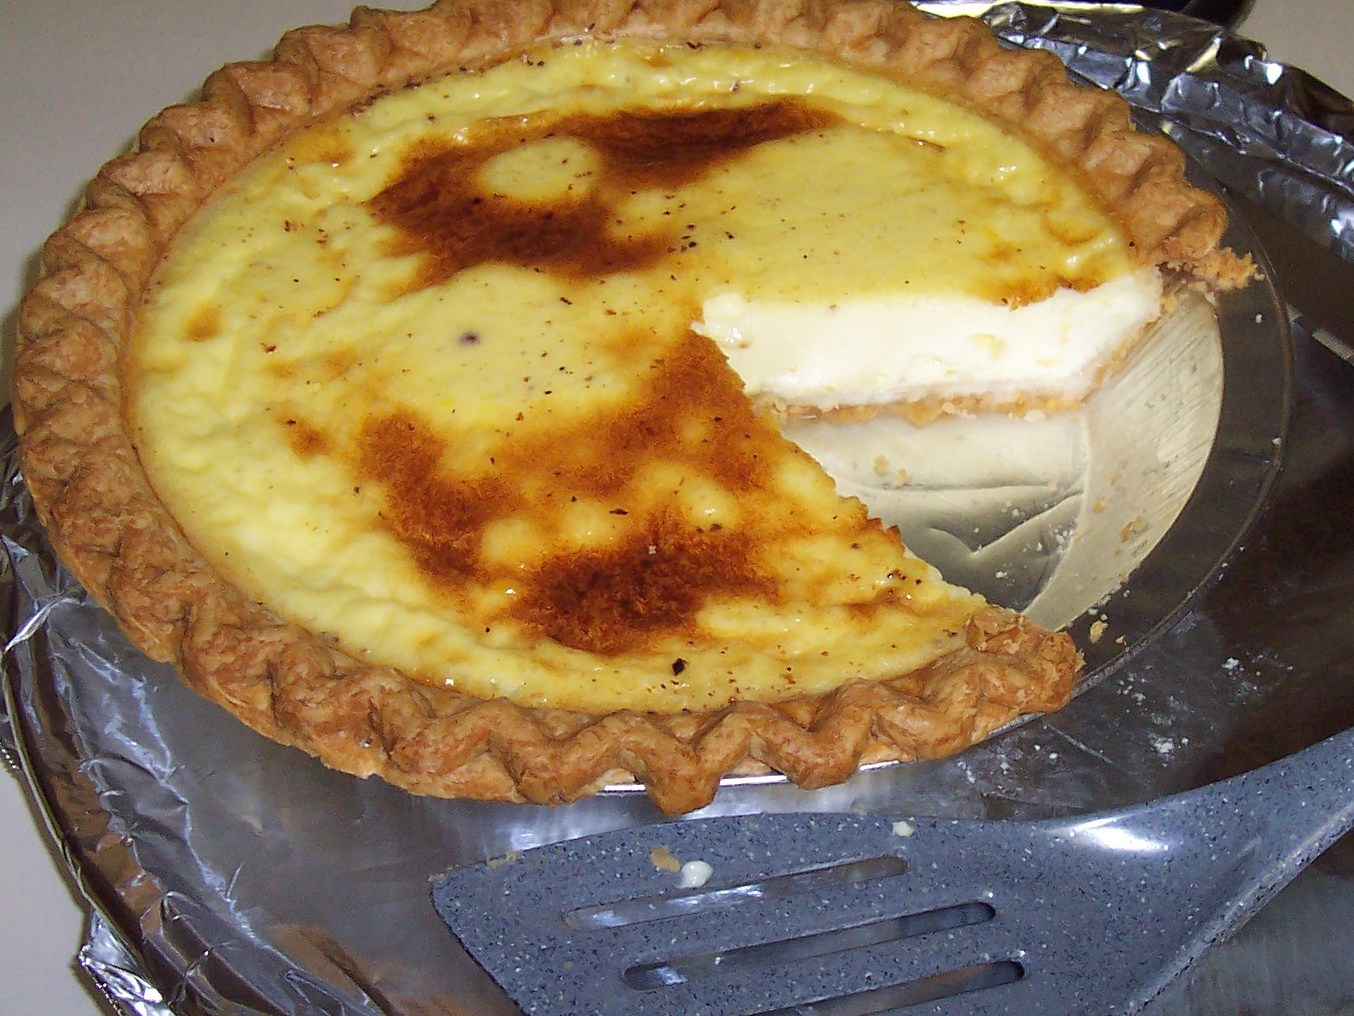 egg custard pie